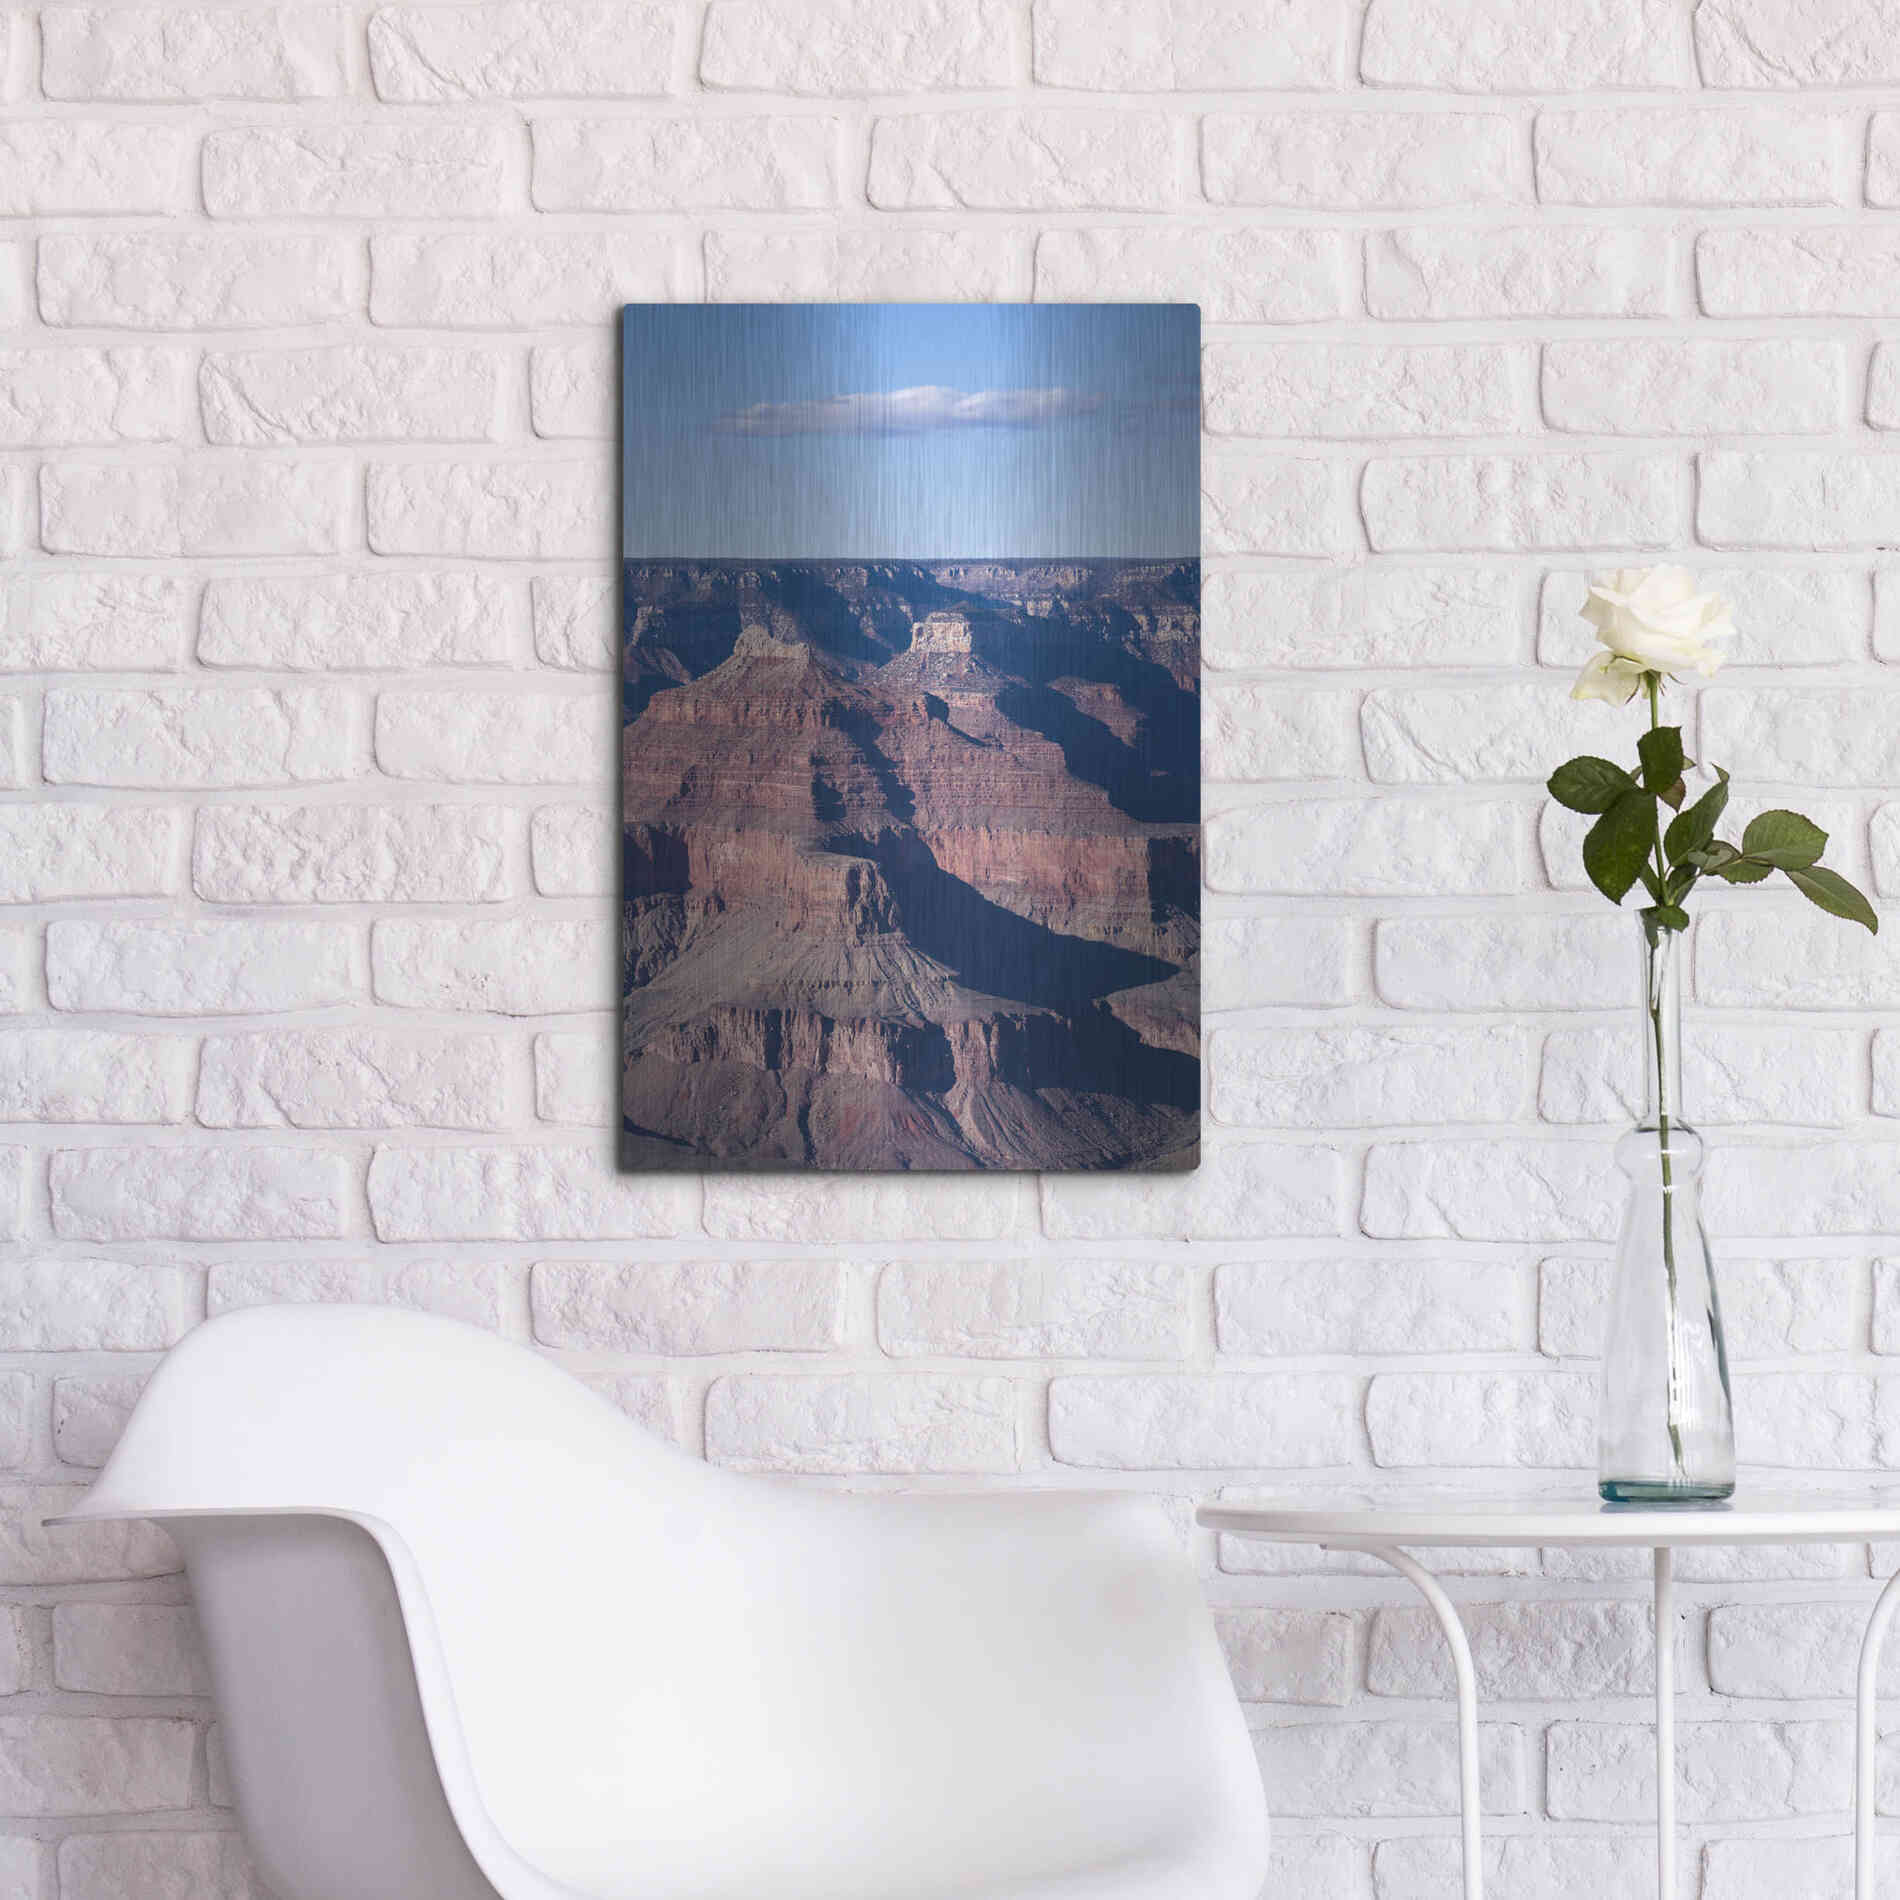 Luxe Metal Art ' Grand Canyon' by Robin Vandenabeele, Metal Wall Art,16x24